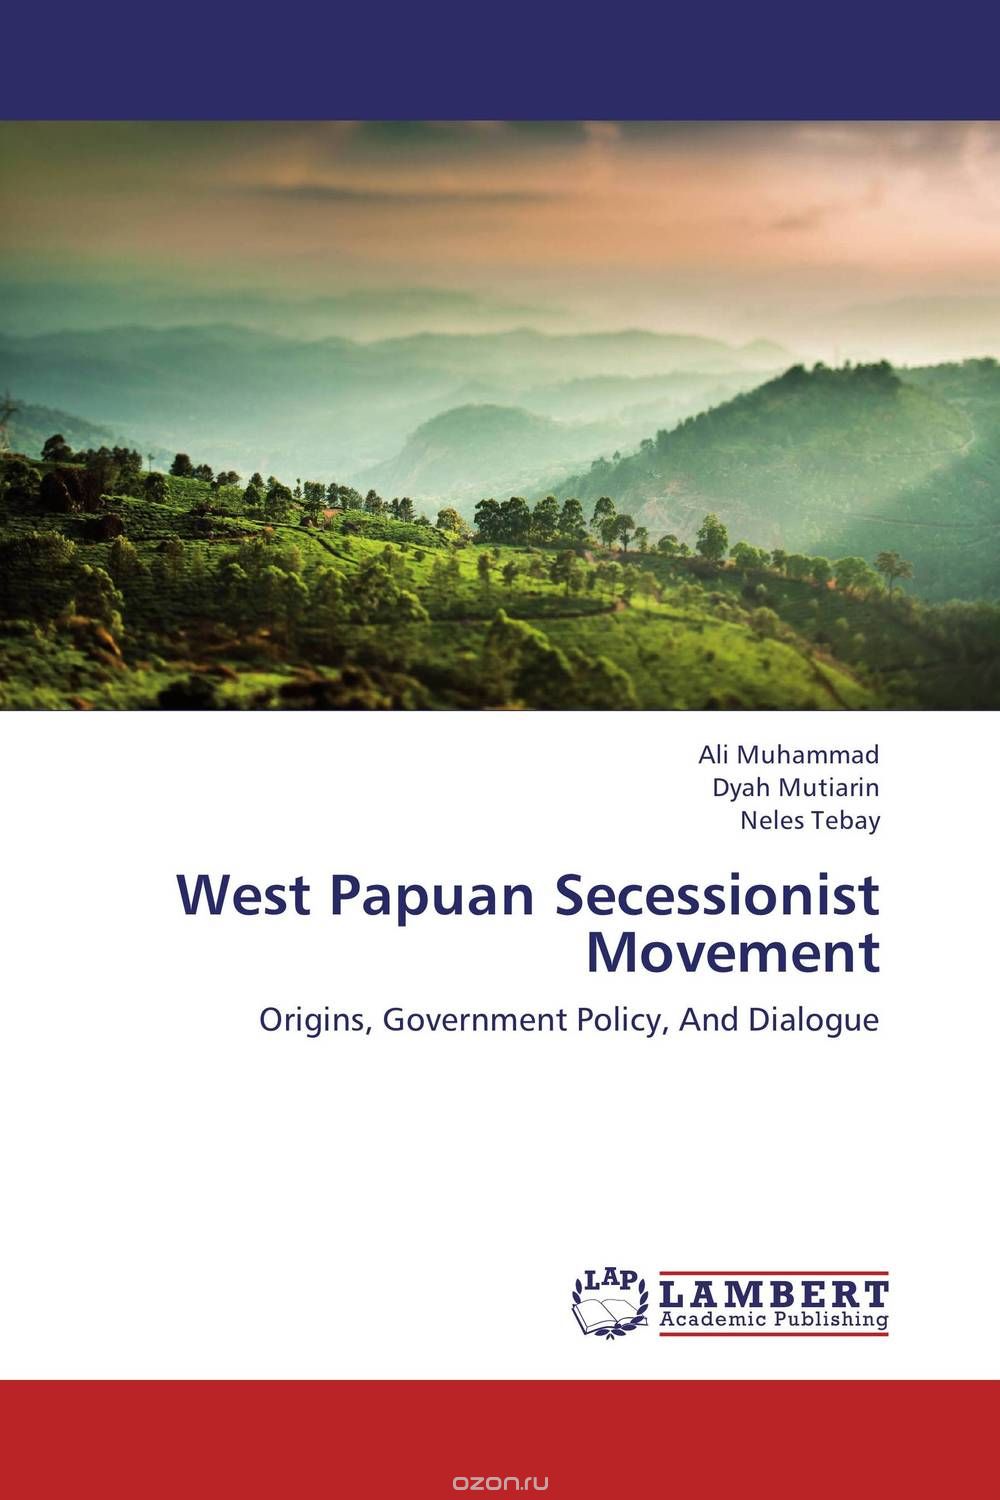 Скачать книгу "West Papuan Secessionist Movement"